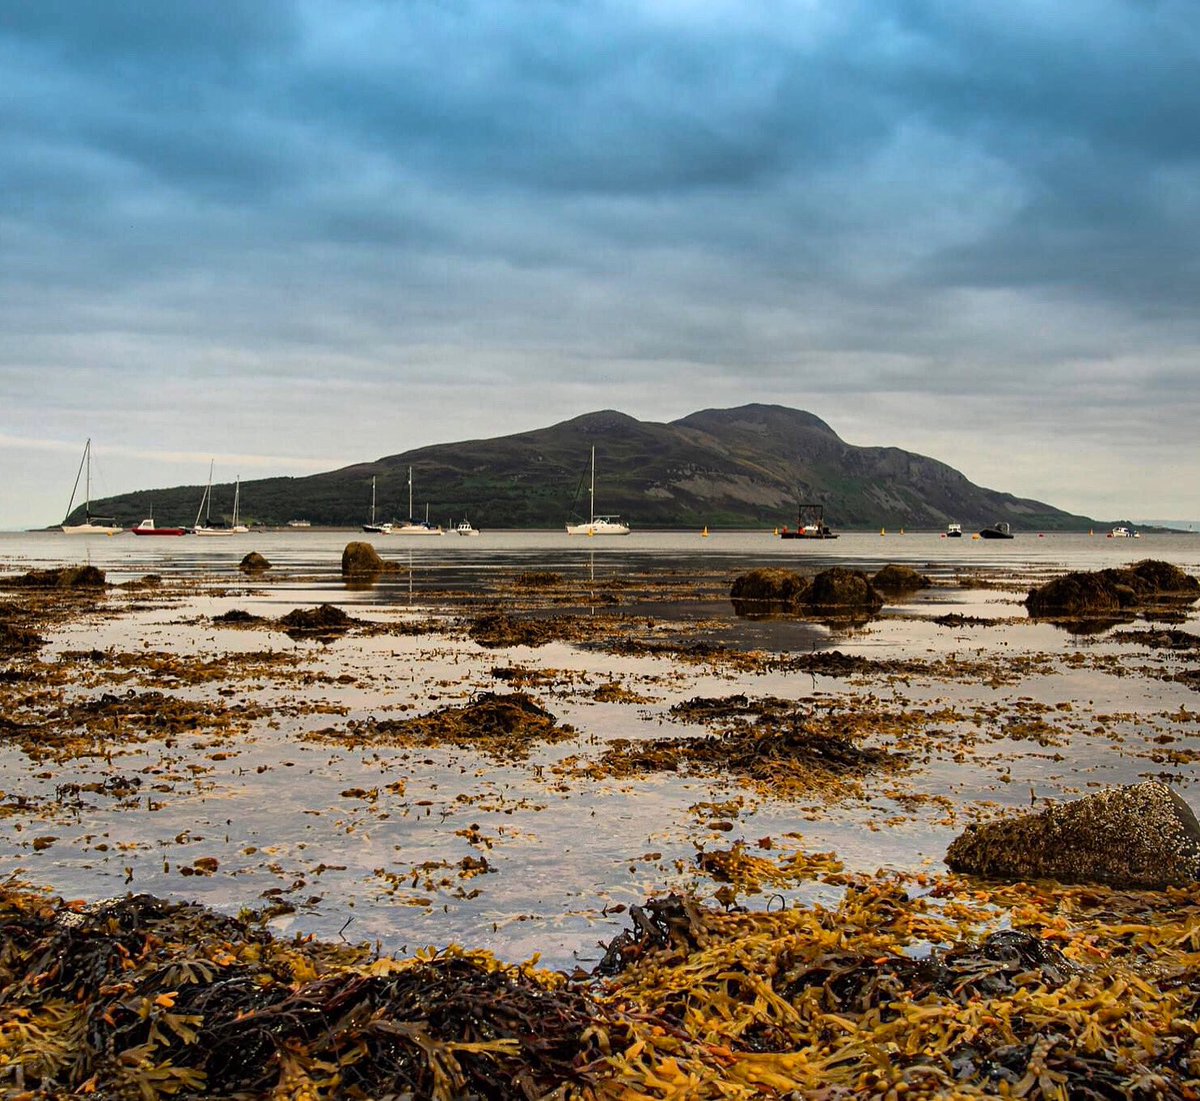 The HolyIsle on the Isle of Arran 😊🏴󠁧󠁢󠁳󠁣󠁴󠁿 @VisitScotland @BeingScots @StormHour @VisitArran #isleofarran #scotland